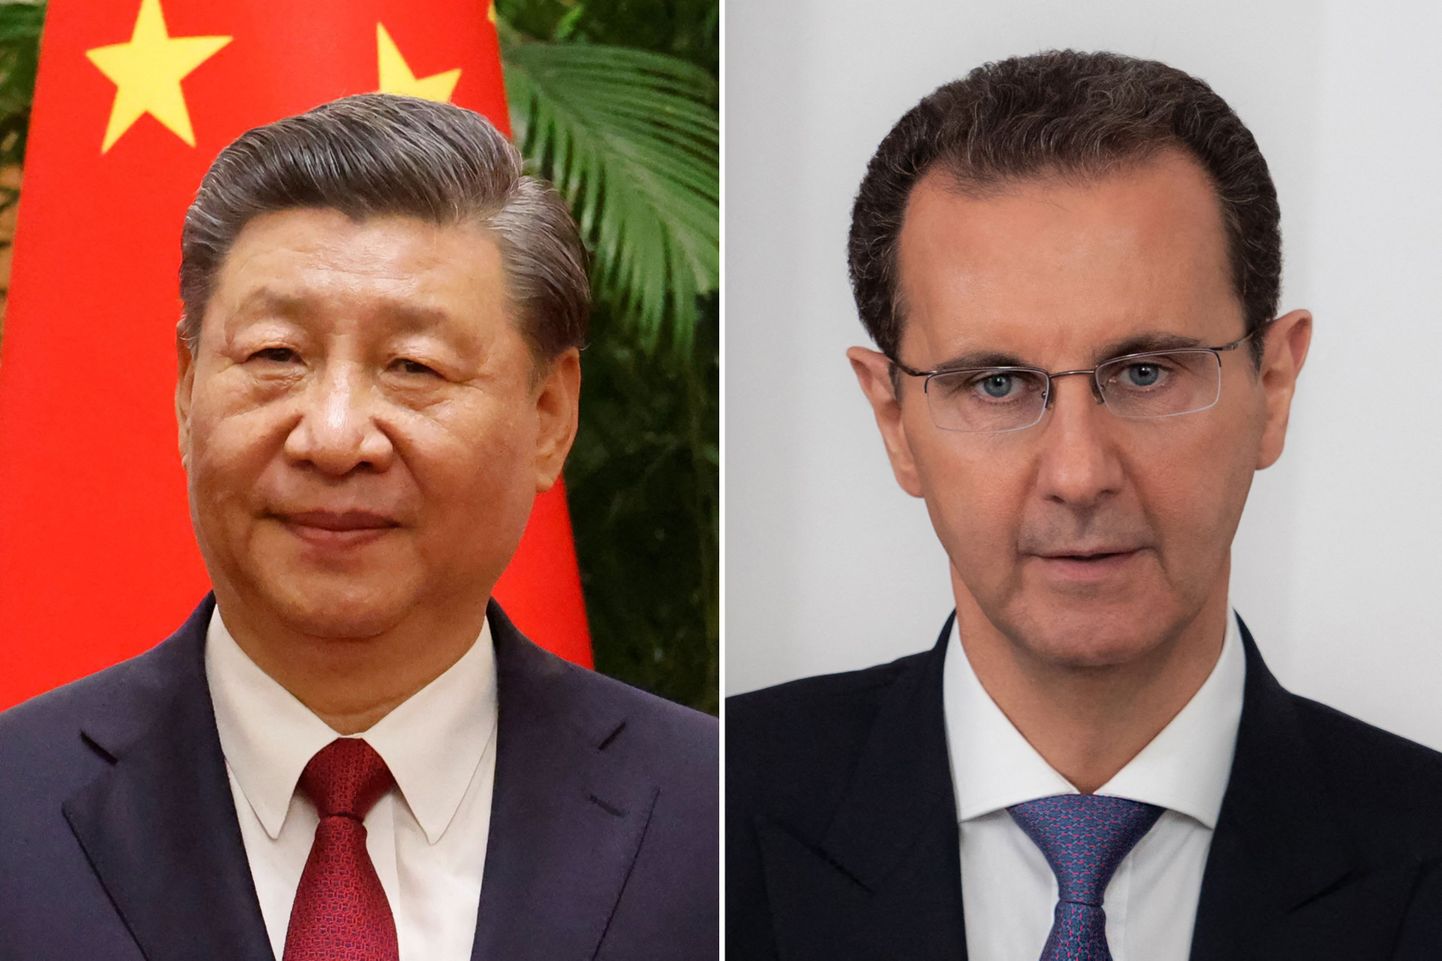 Hiina president Xi Jinping ja Süüria riigipea Bashar al-Assad.